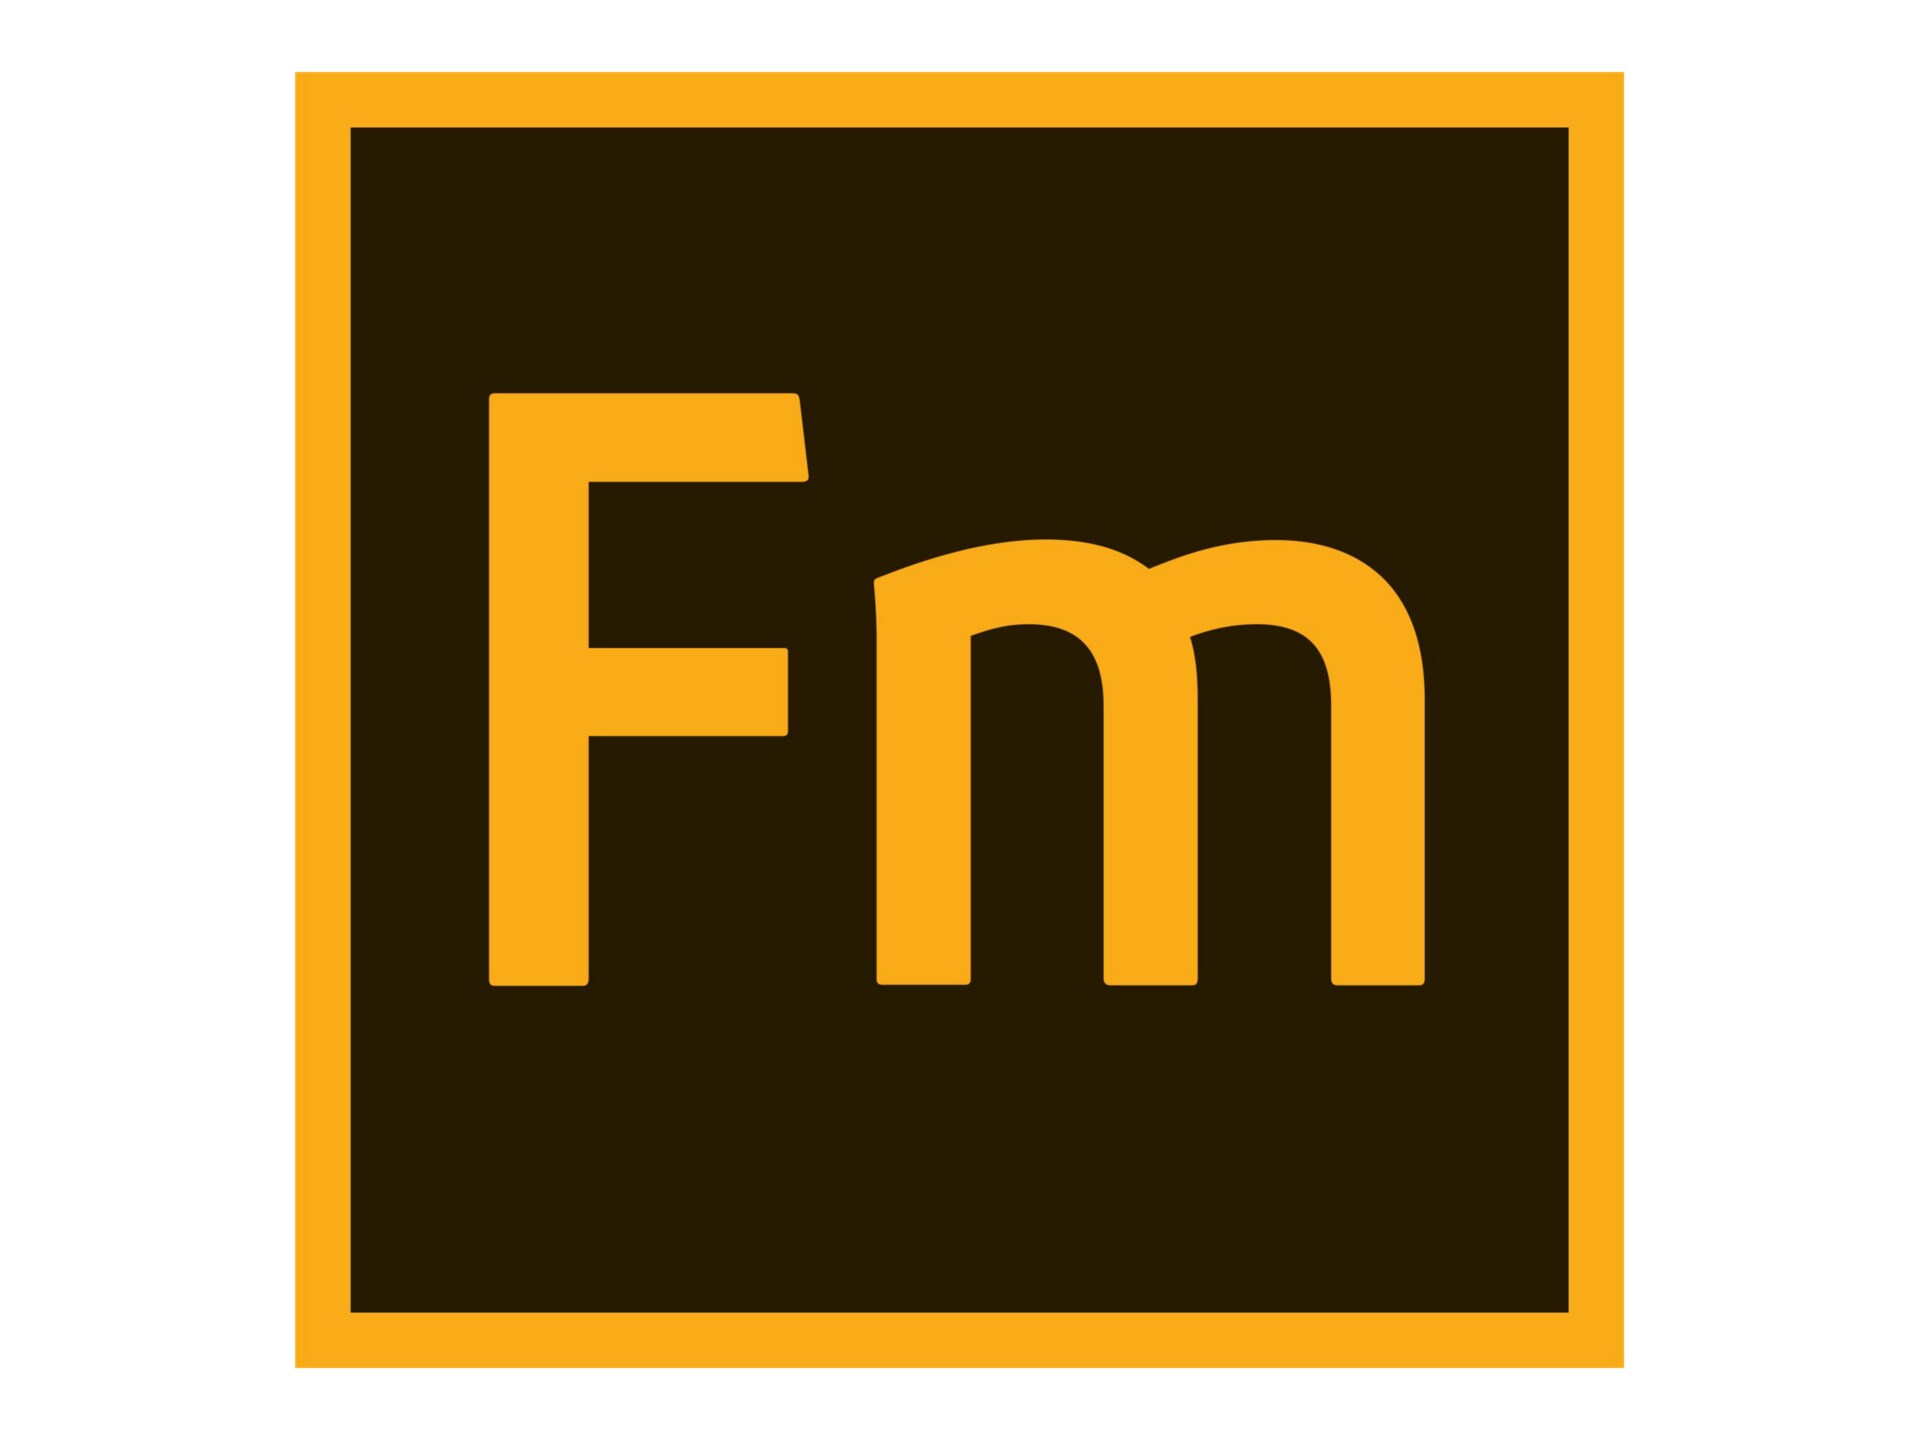 Adobe FrameMaker for teams - Subscription New (annual) - 1 user